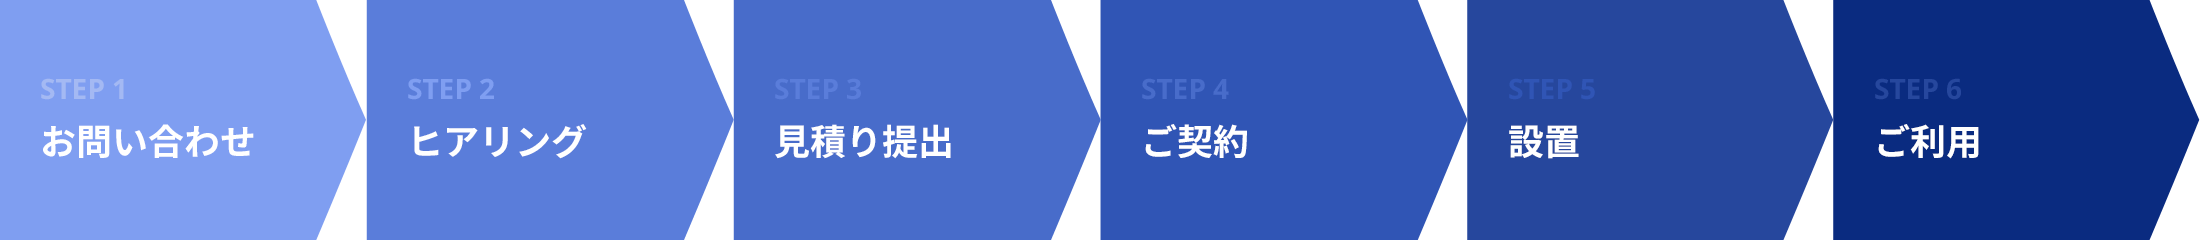 Step1 お問い合わせ → Step2 ヒアリング → Step3 見積り提出 → Step4 ご契約 → Step5 設置 → Step6 ご利用